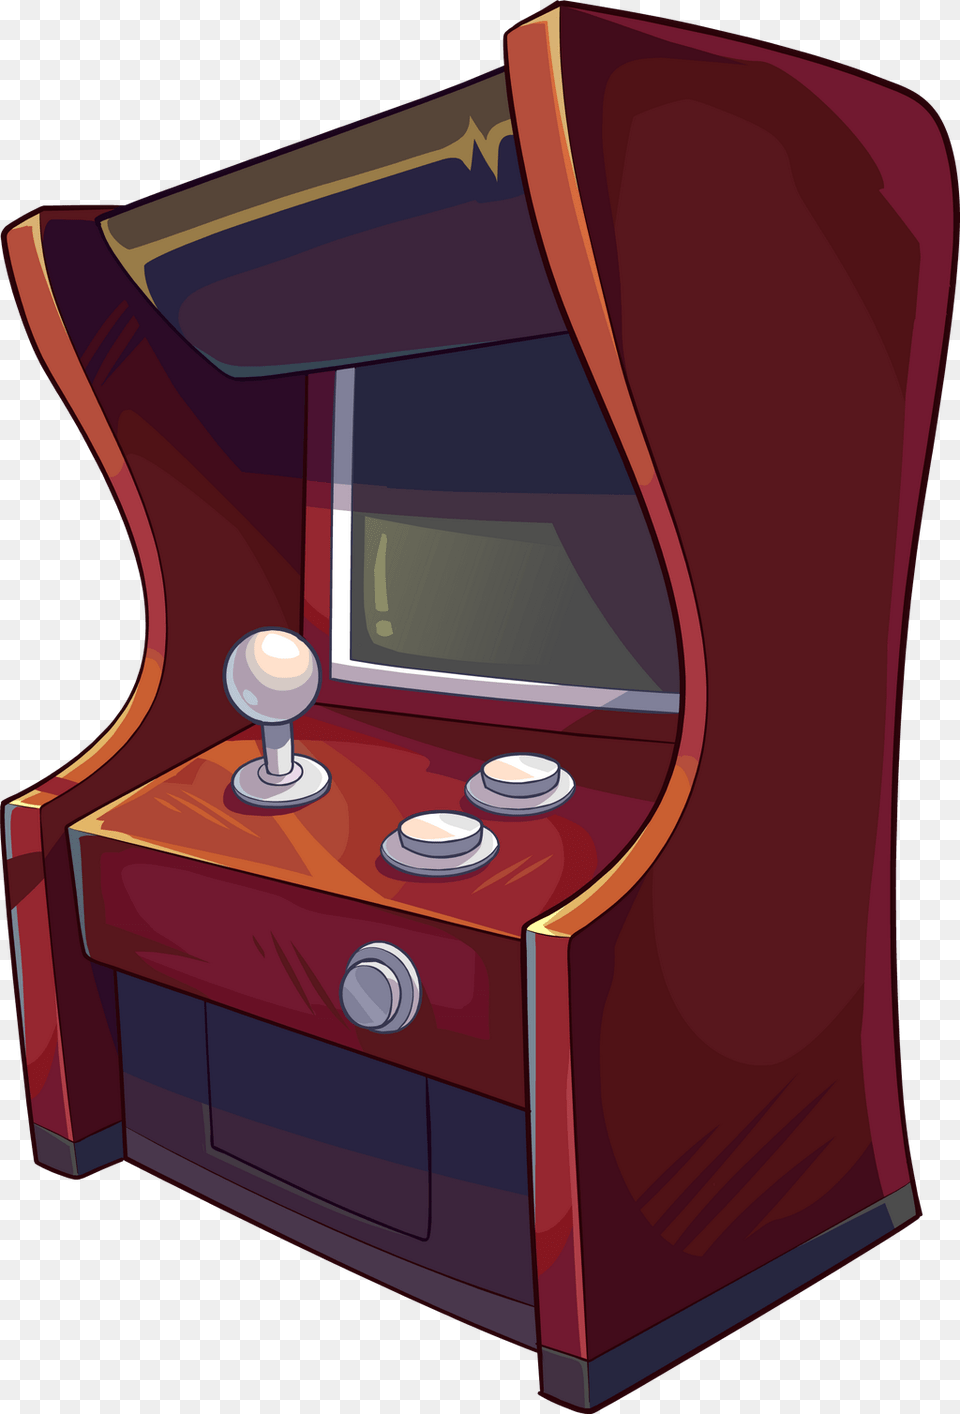 Unplugged Arcade Machine Club Penguin Arcade Machine, Arcade Game Machine, Game Png Image